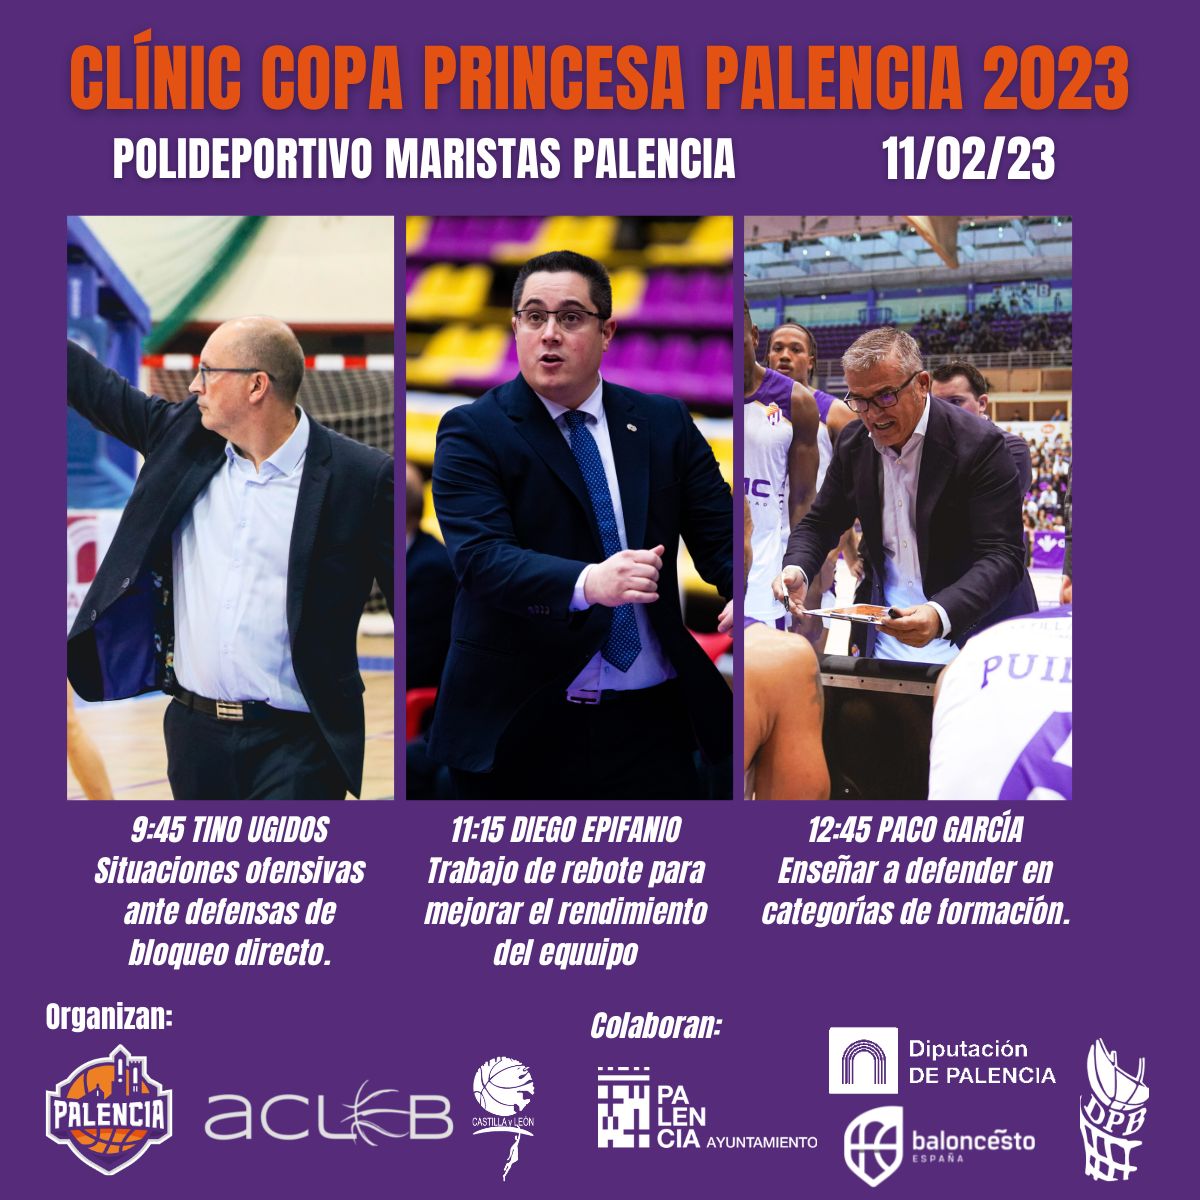 Clínic Copa Princesa Palencia 2023